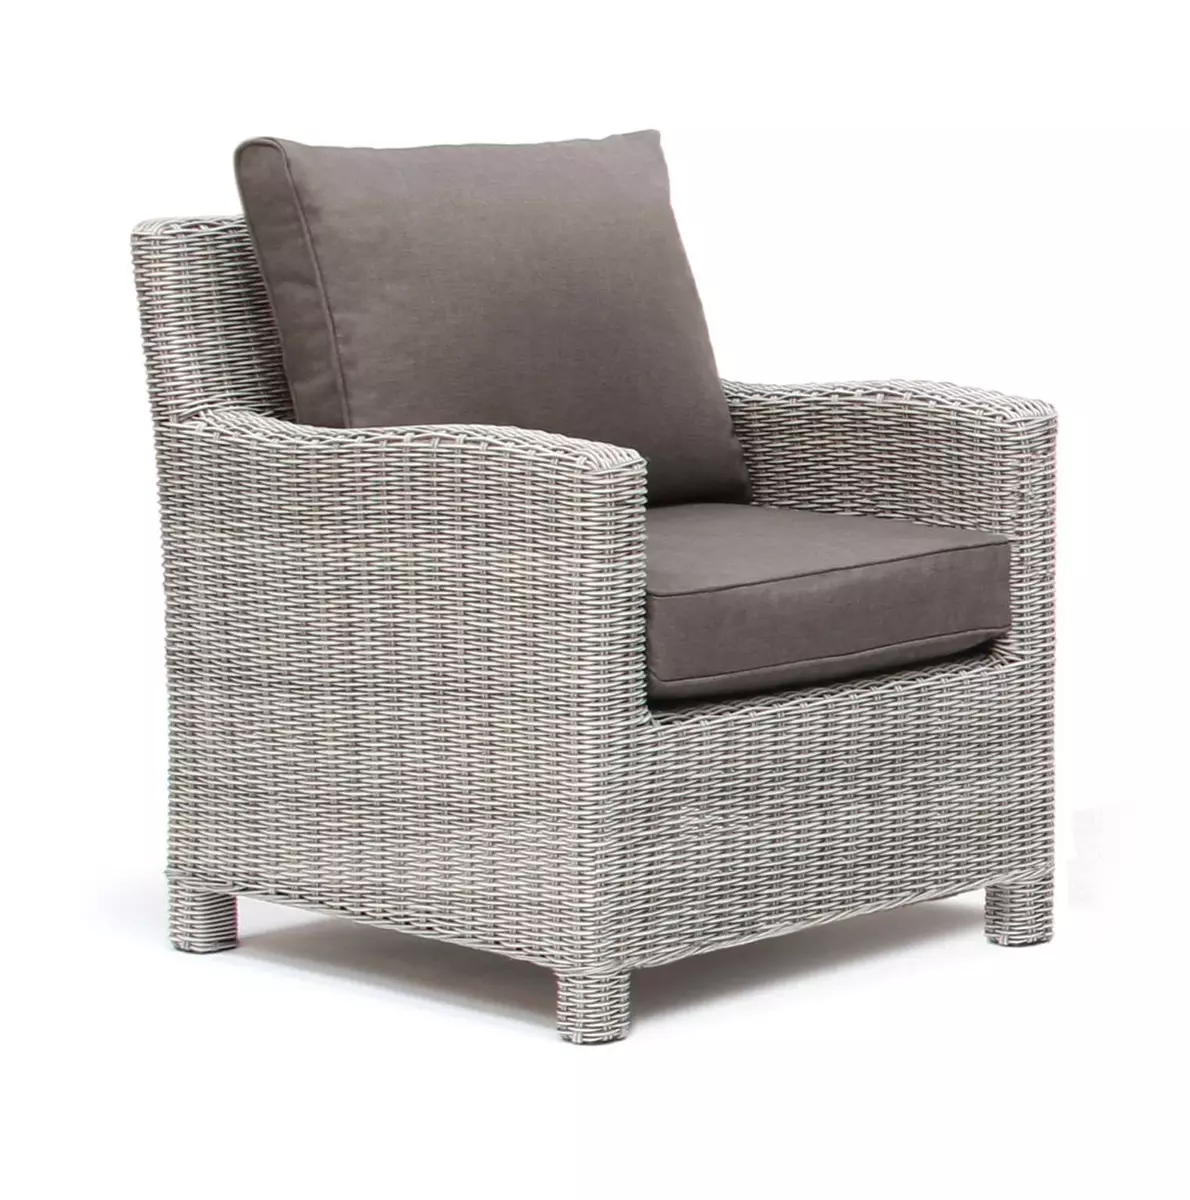 Palma Lounge Chair - image 3